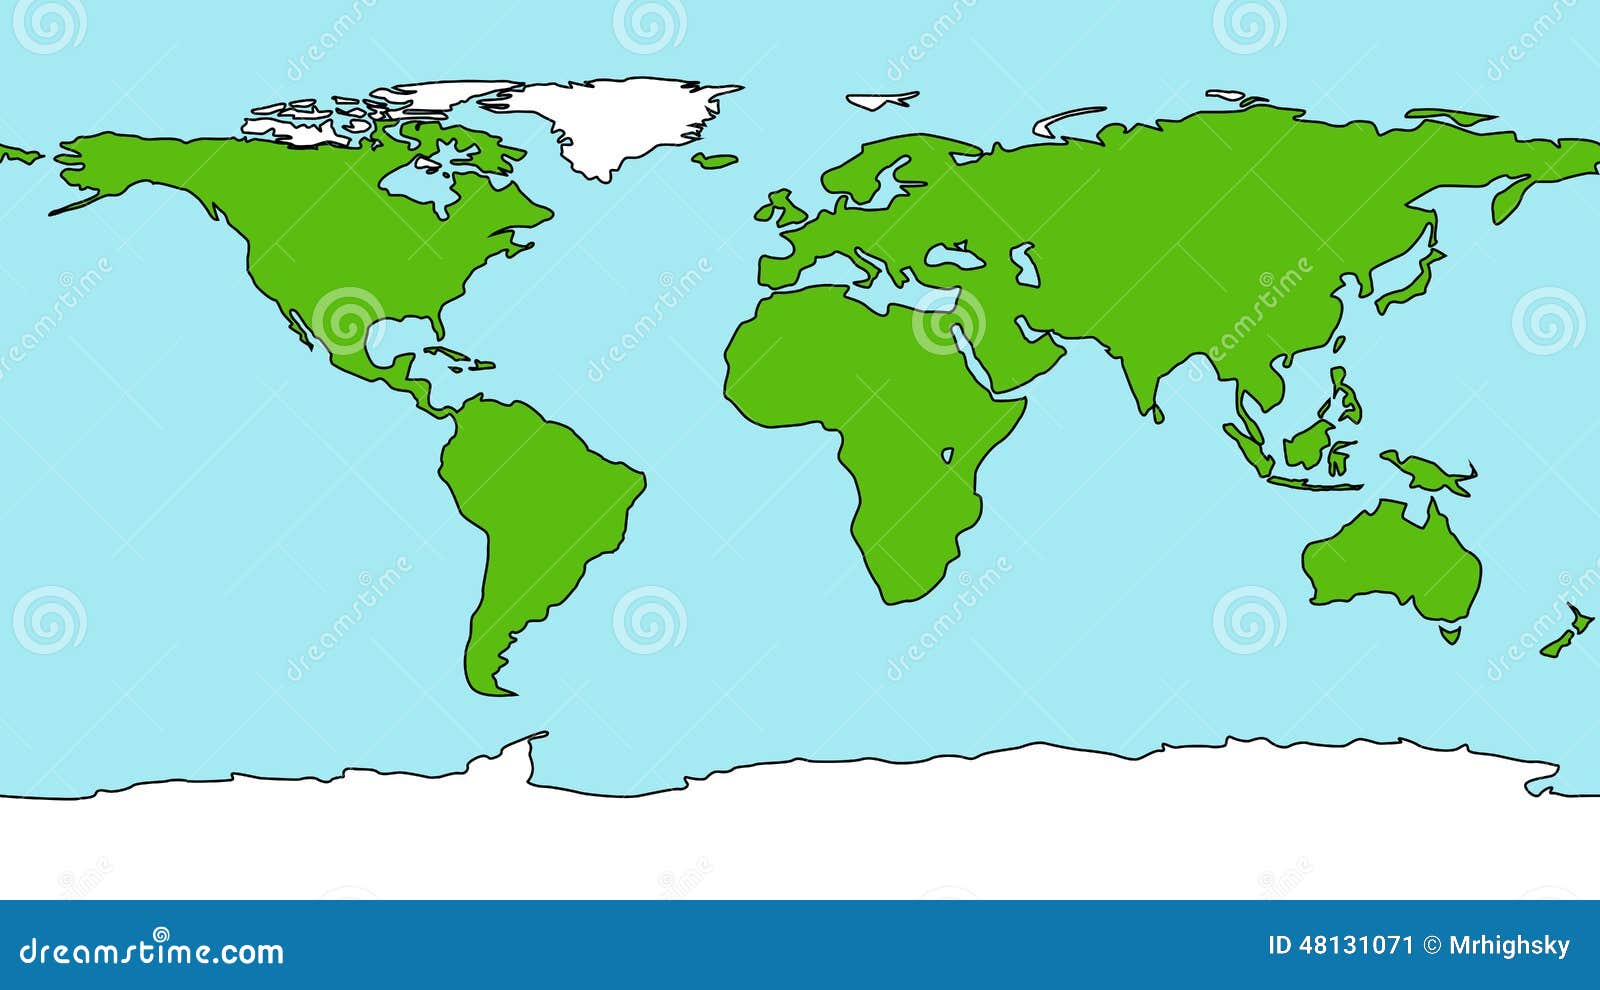 Cartoon style Earth map stock vector. Illustration of earth - 48131071